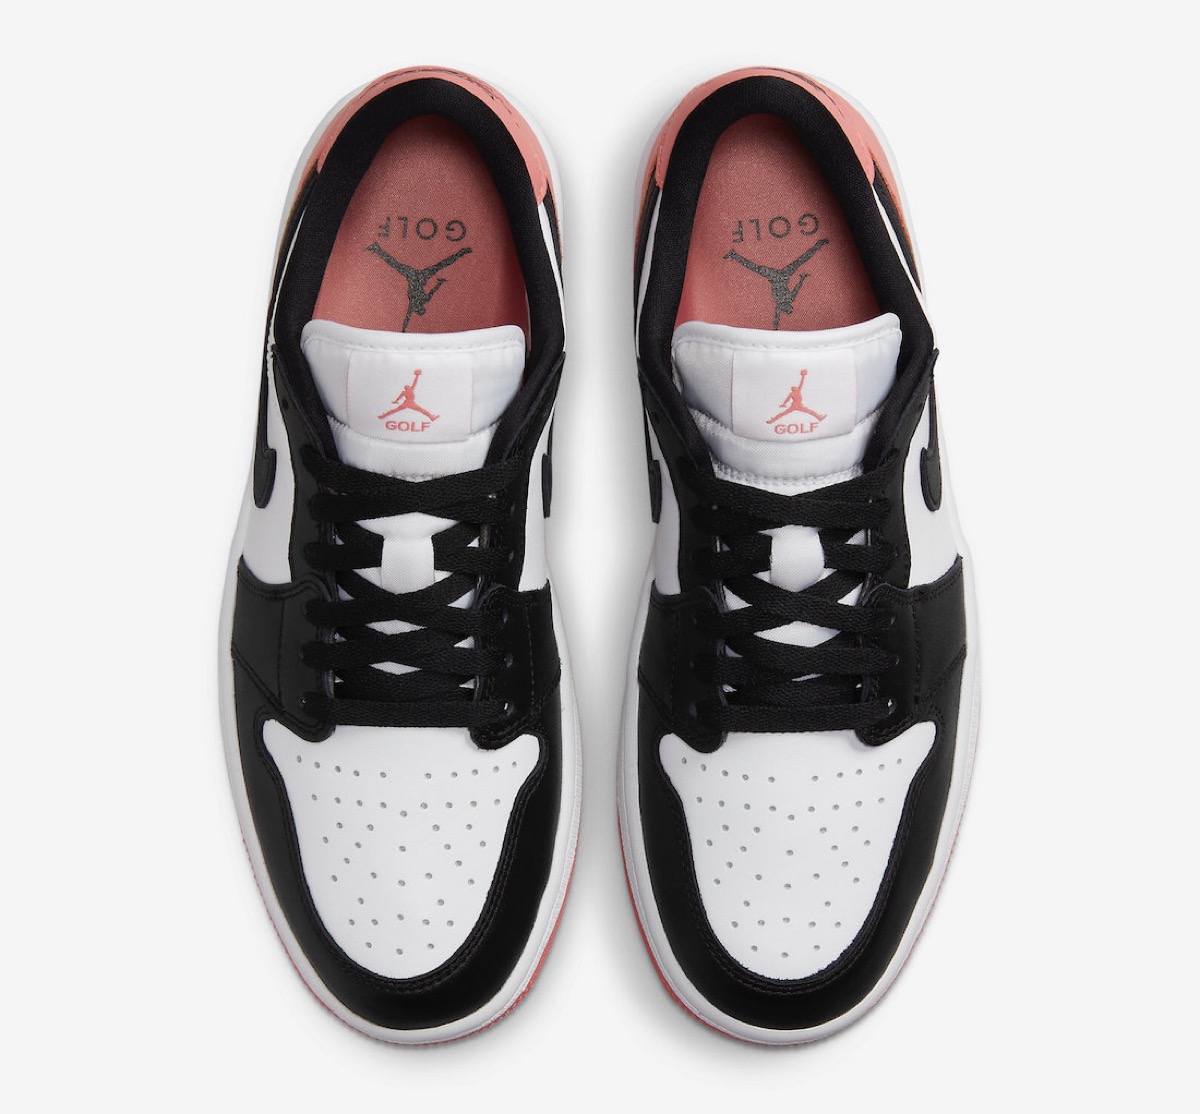 Nike Air Jordan 1 Low Golf “Rust Pink”が国内5月3日に再販予定